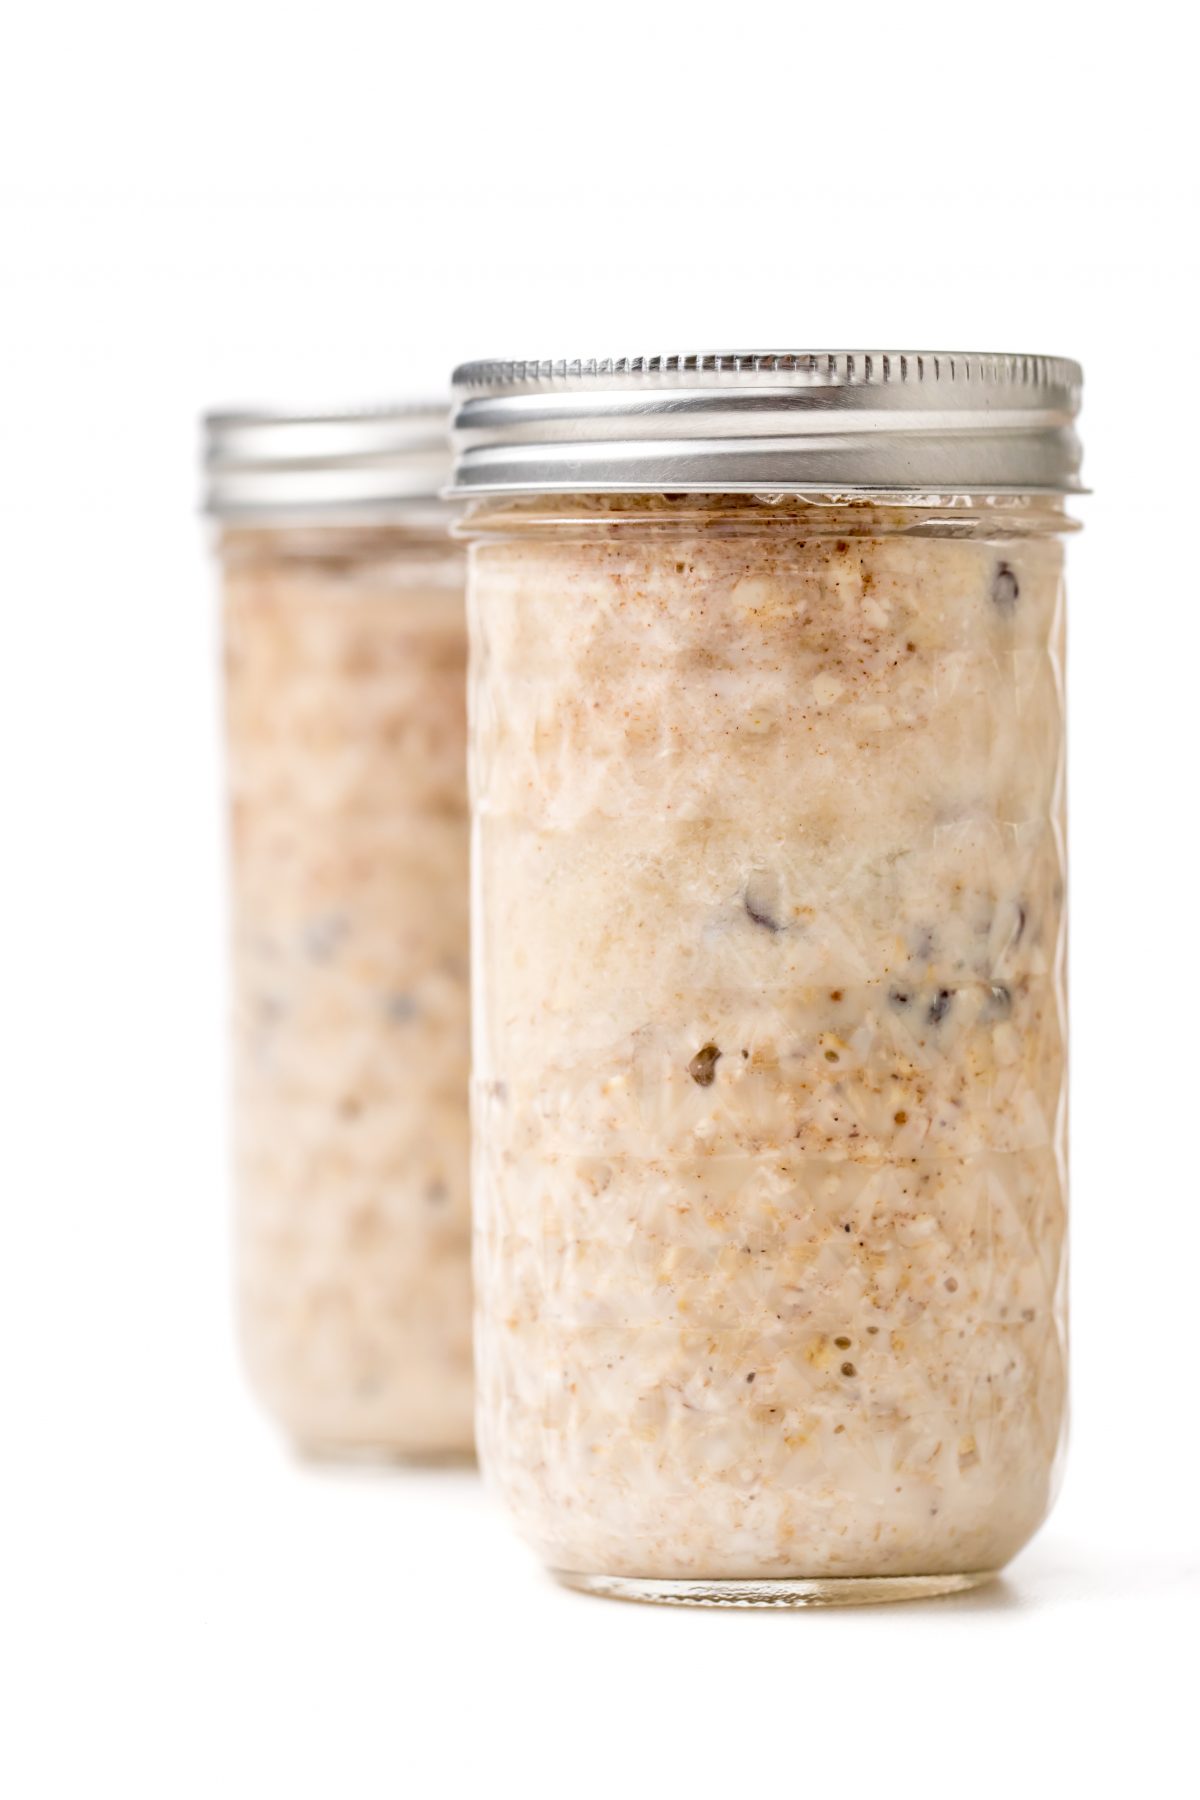 Put no-sugar-added overnight oats in refrigerator